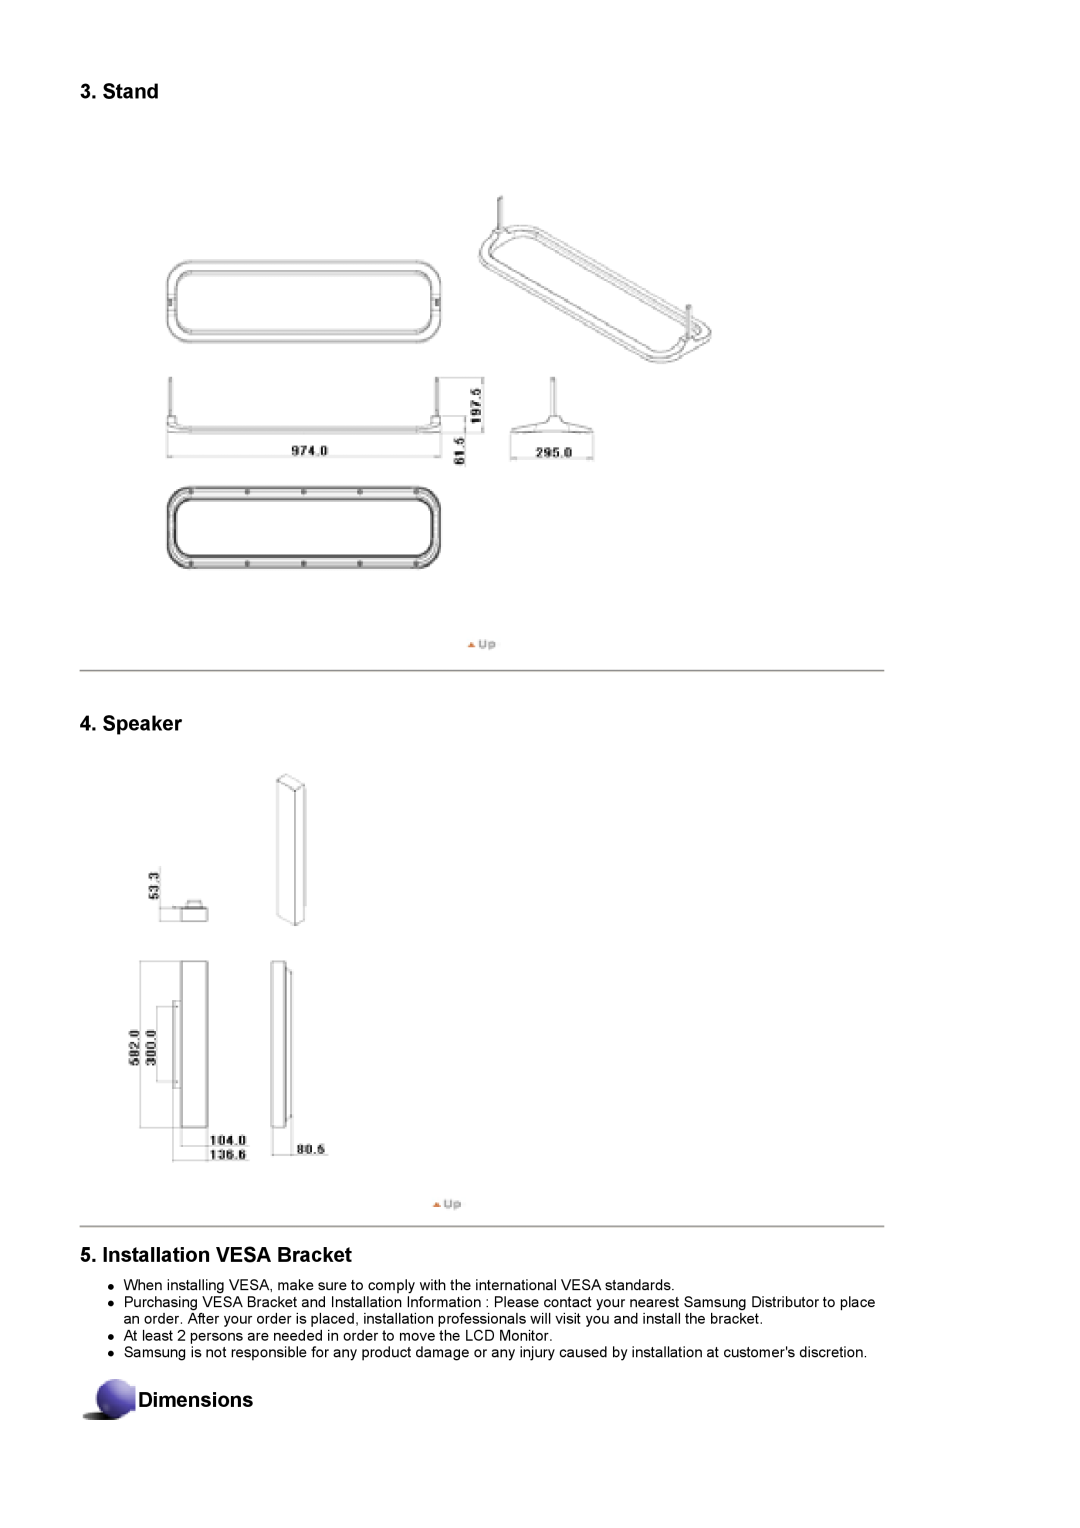 Samsung 400Pn, 400P manual Stand 4. Speaker 5. Installation VESA Bracket, Dimensions 